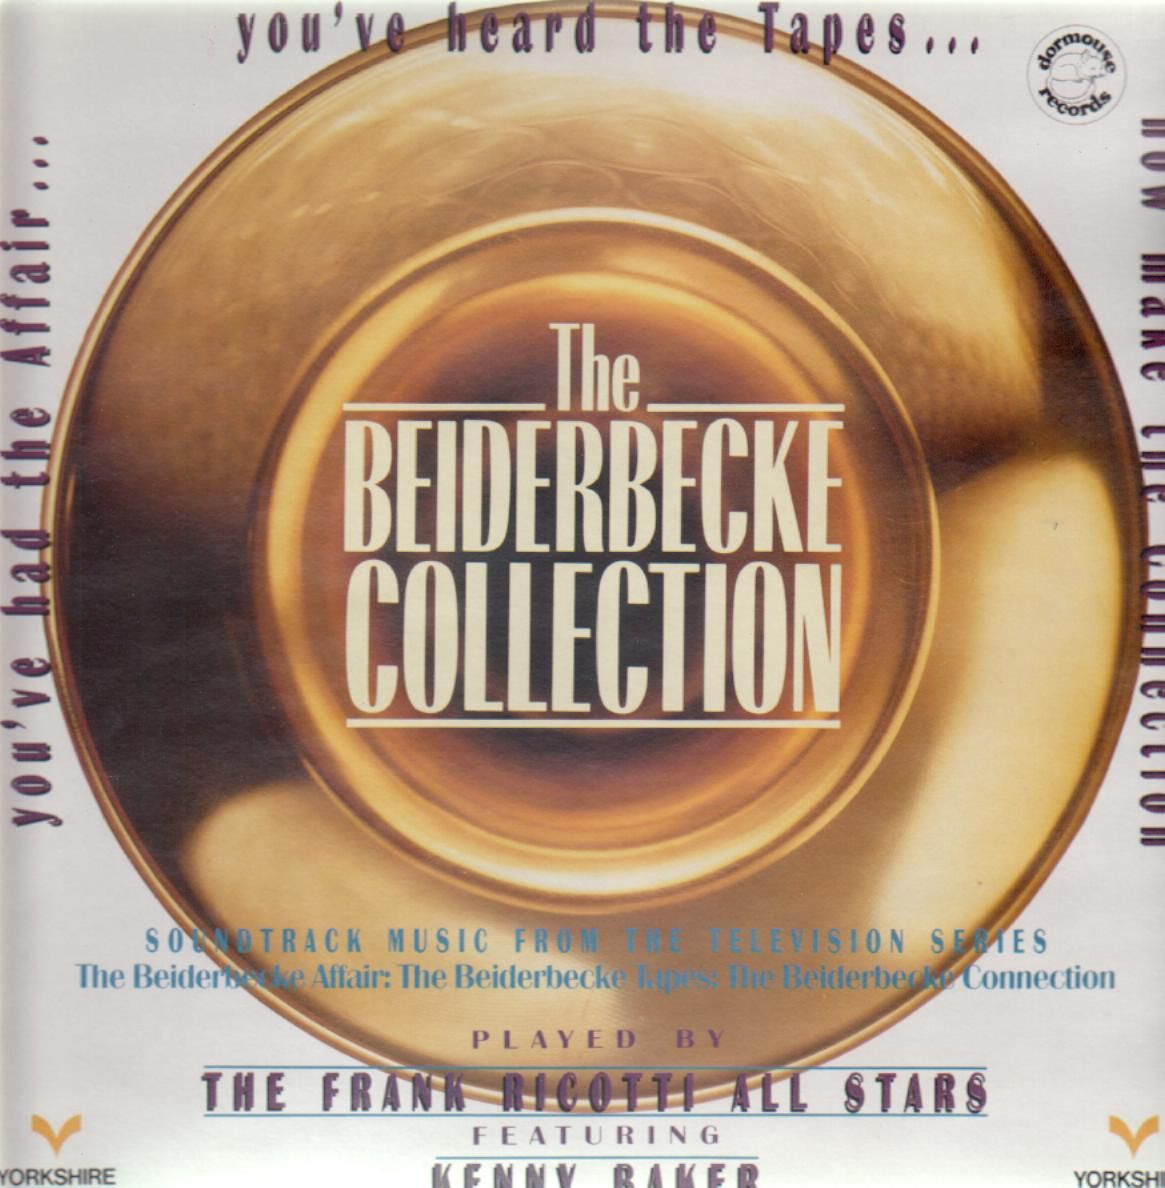 FRANK RICOTTI - The Beiderbecke Collection cover 